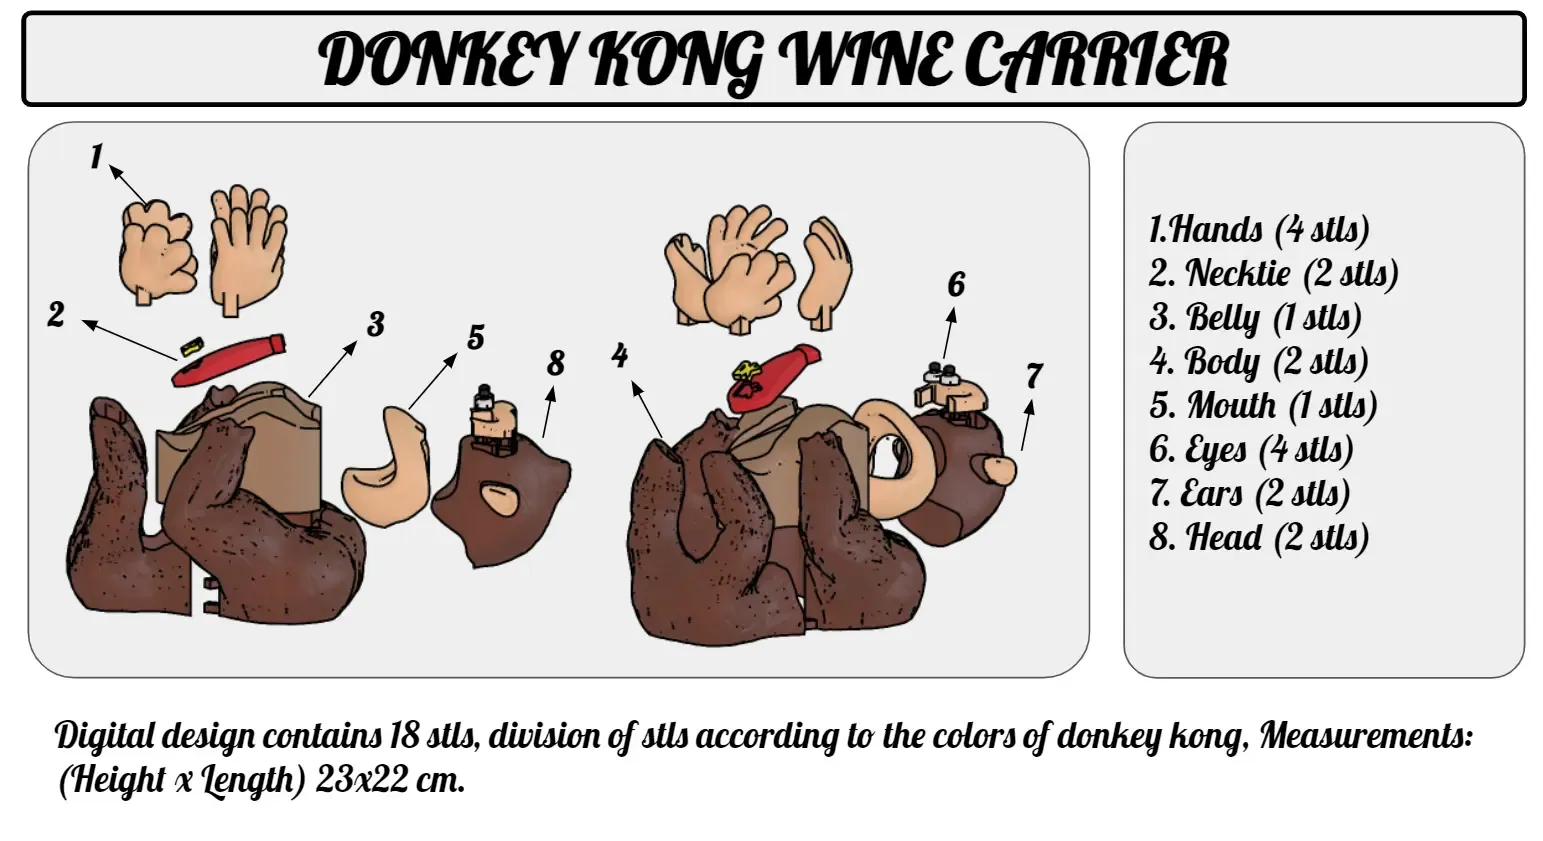 DONKEY KONG WINE CARRIER